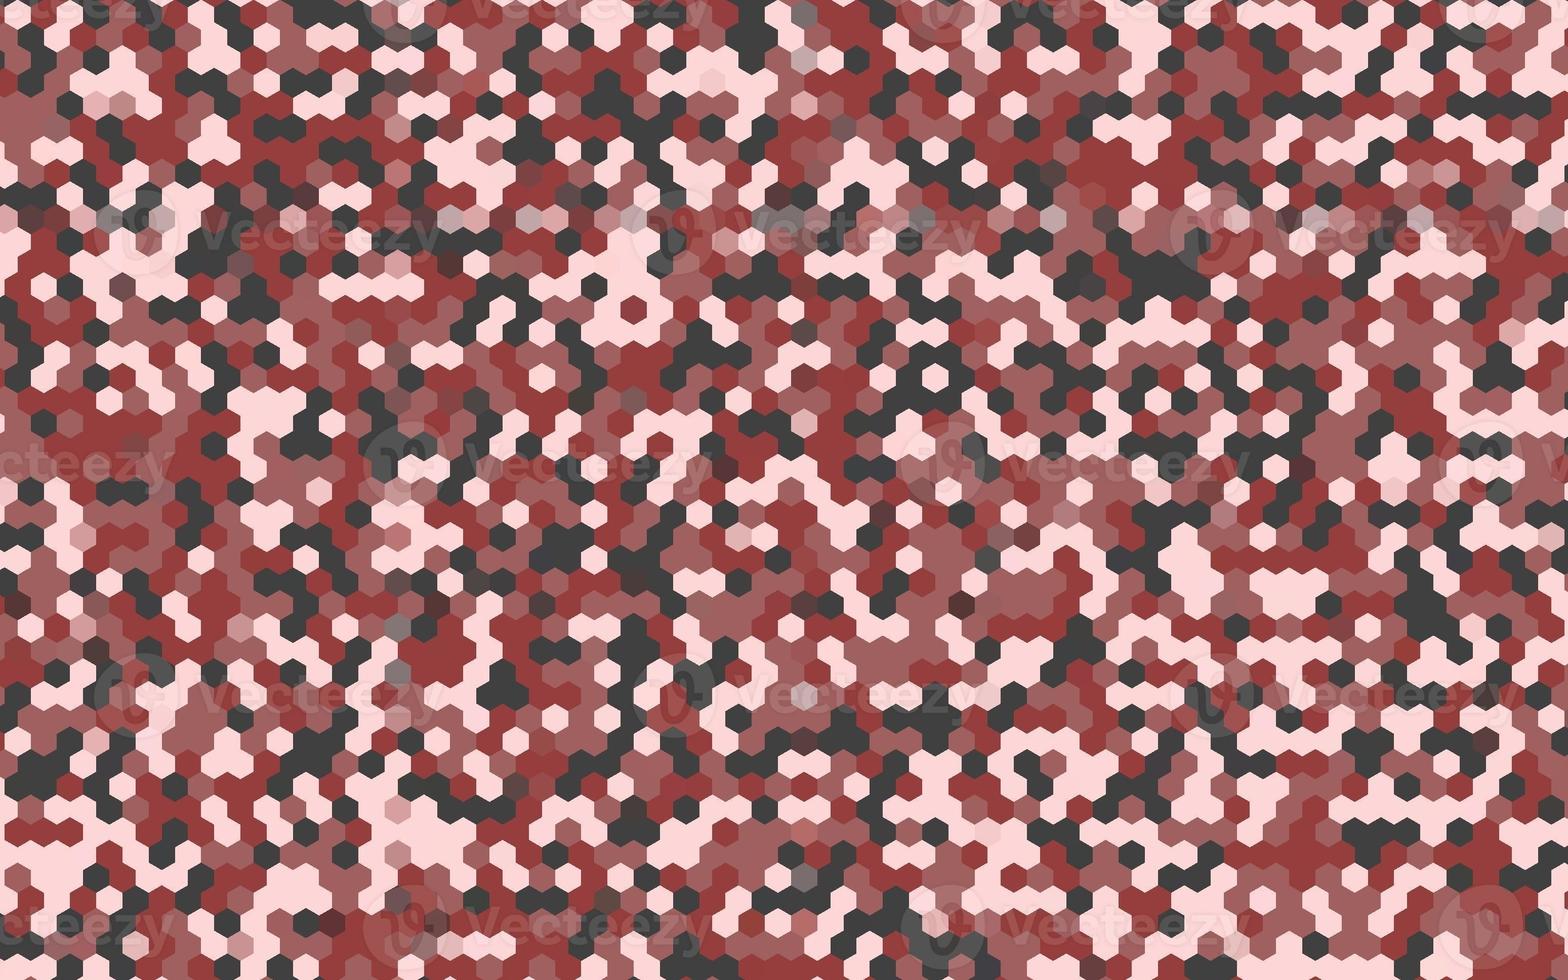 Futuristic polka dot pattern illustration background. Suitable for presentation, book cover, website, poster, backdrop, etc. photo